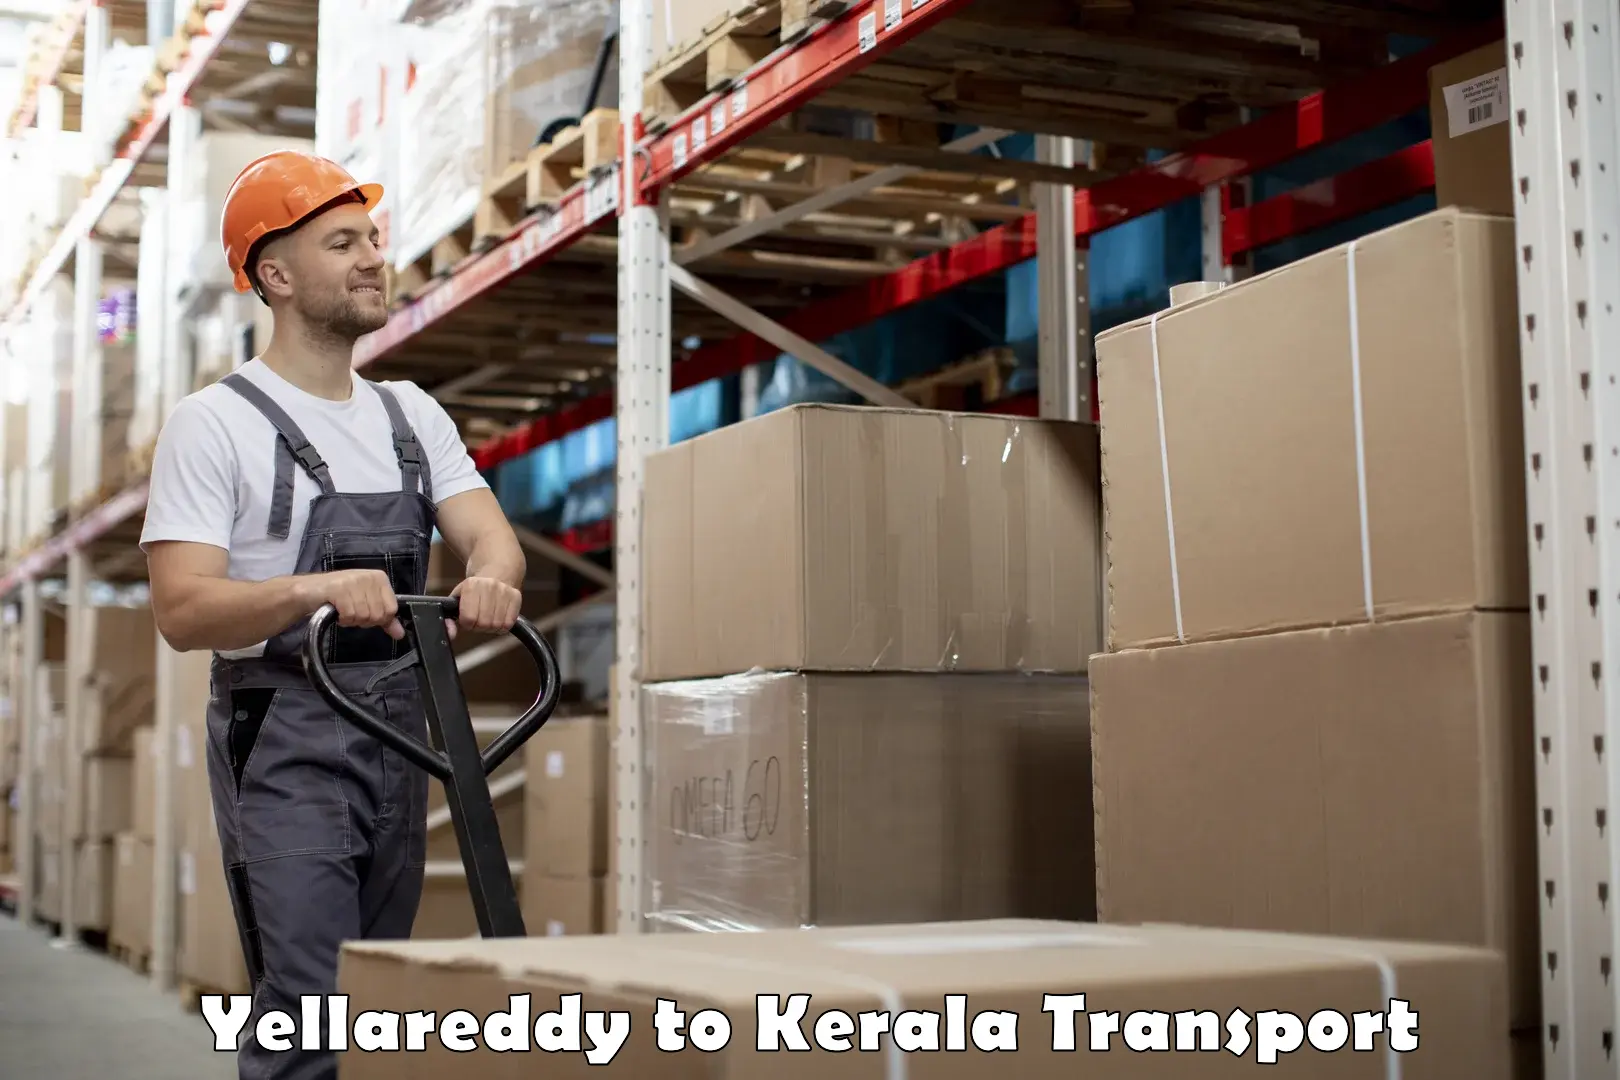 Online transport booking Yellareddy to Trivandrum